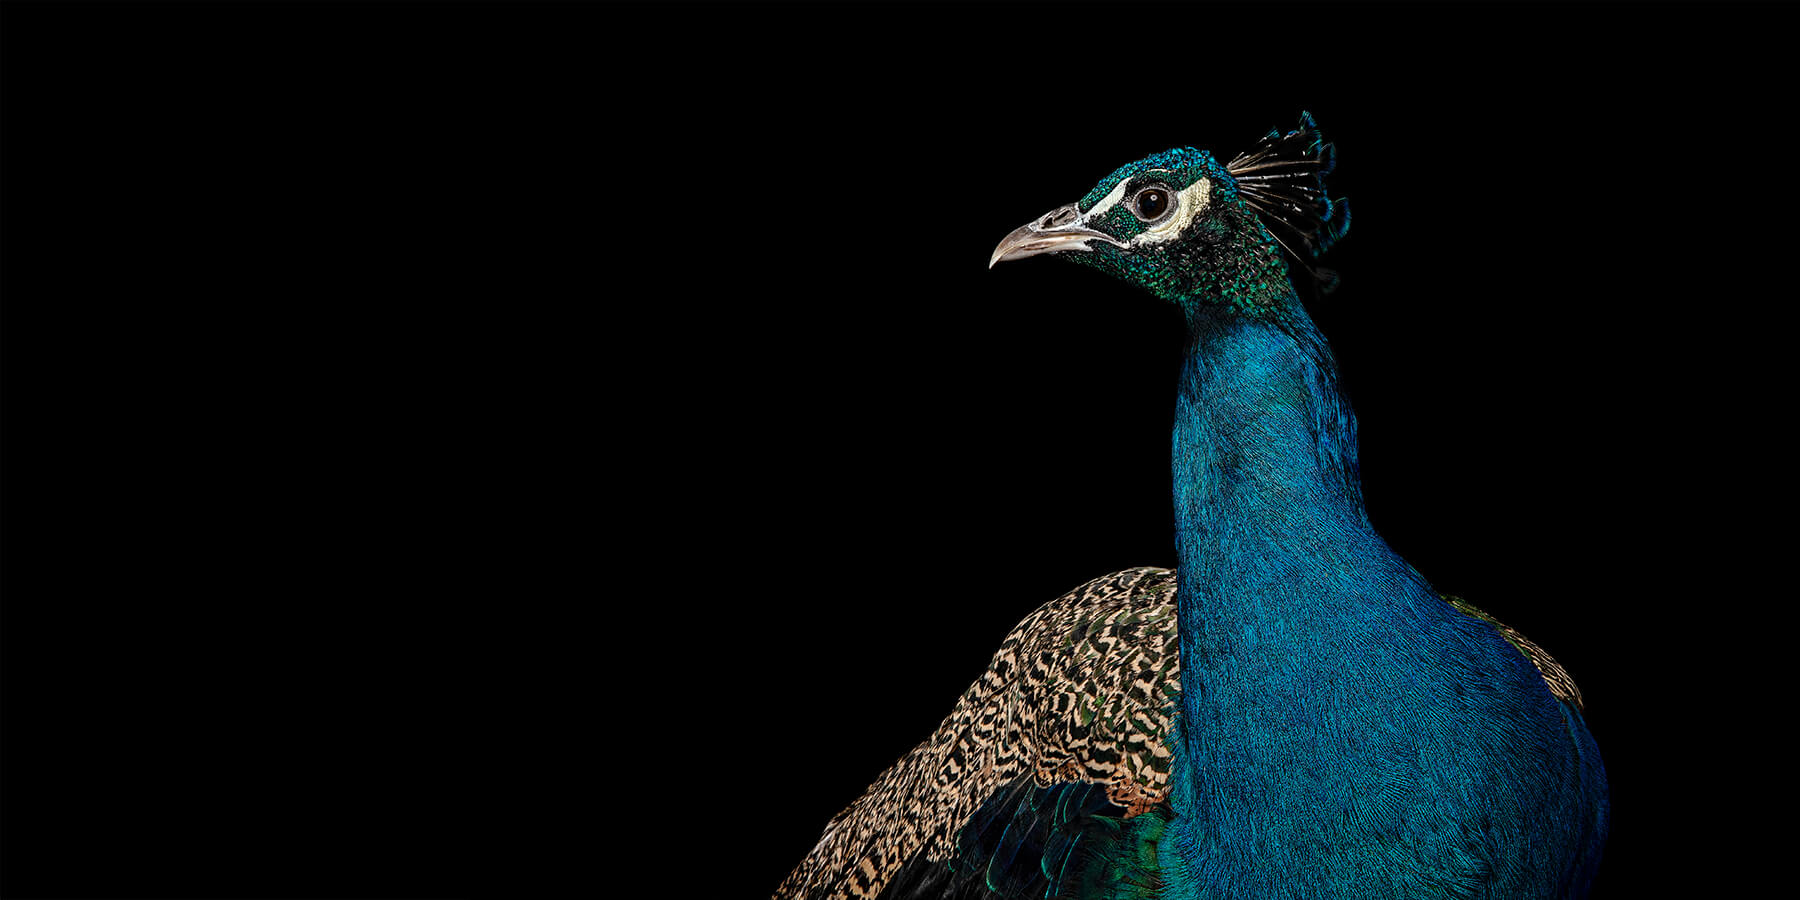 Ludwig the Peacock